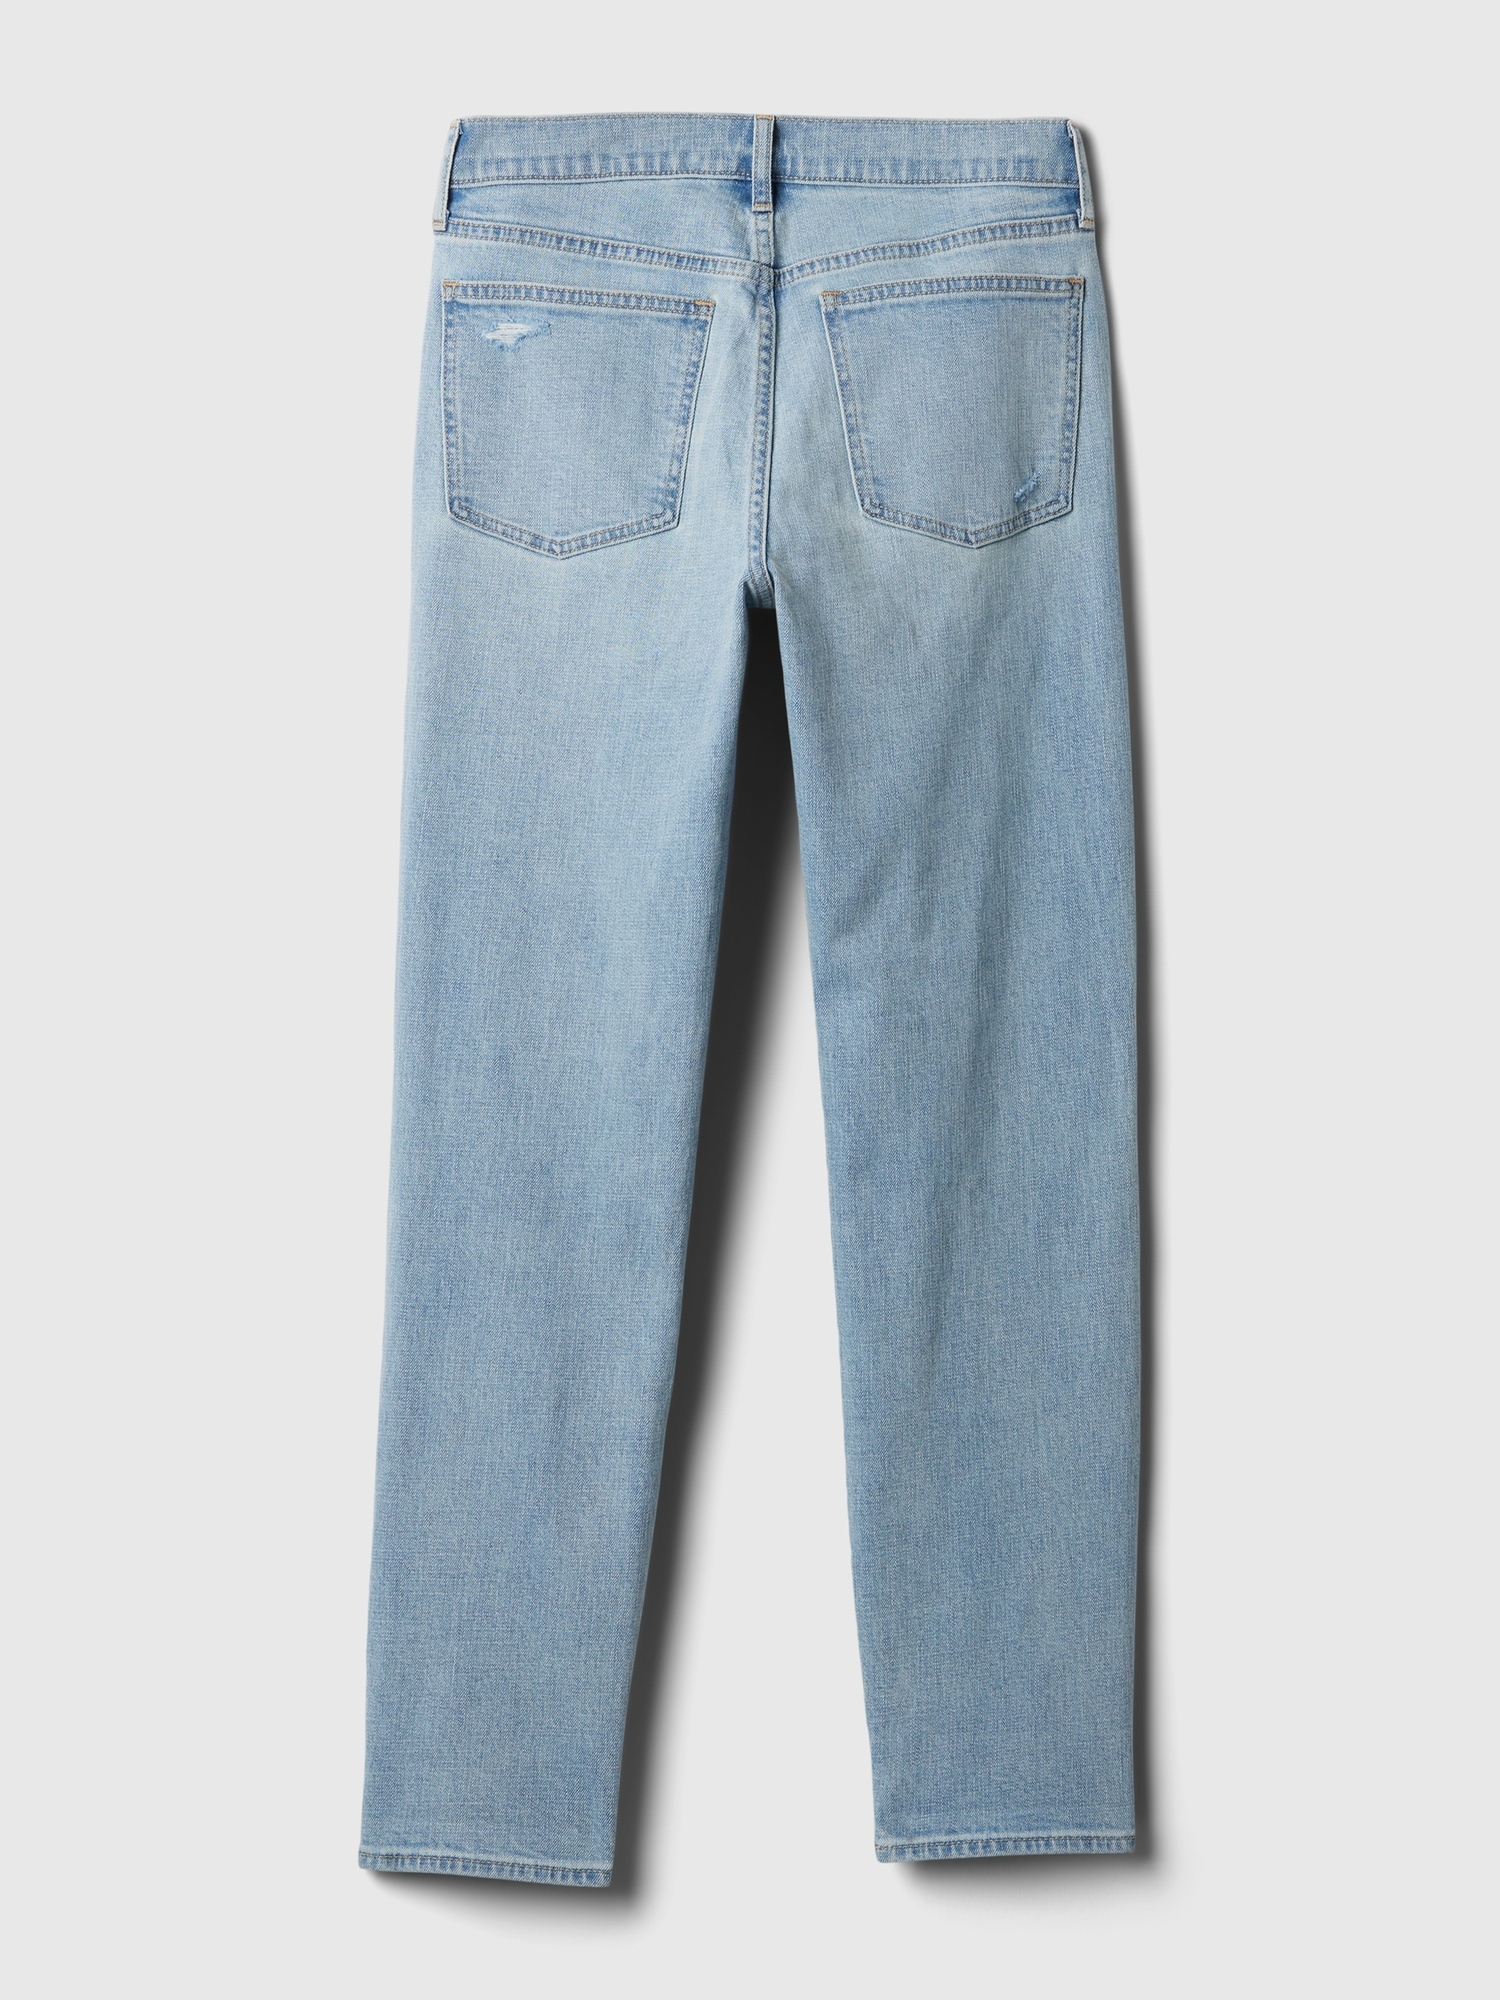 Gap Original Jeans Womens Size 16 Straight Fit Mid Rise Denim Dark Blue